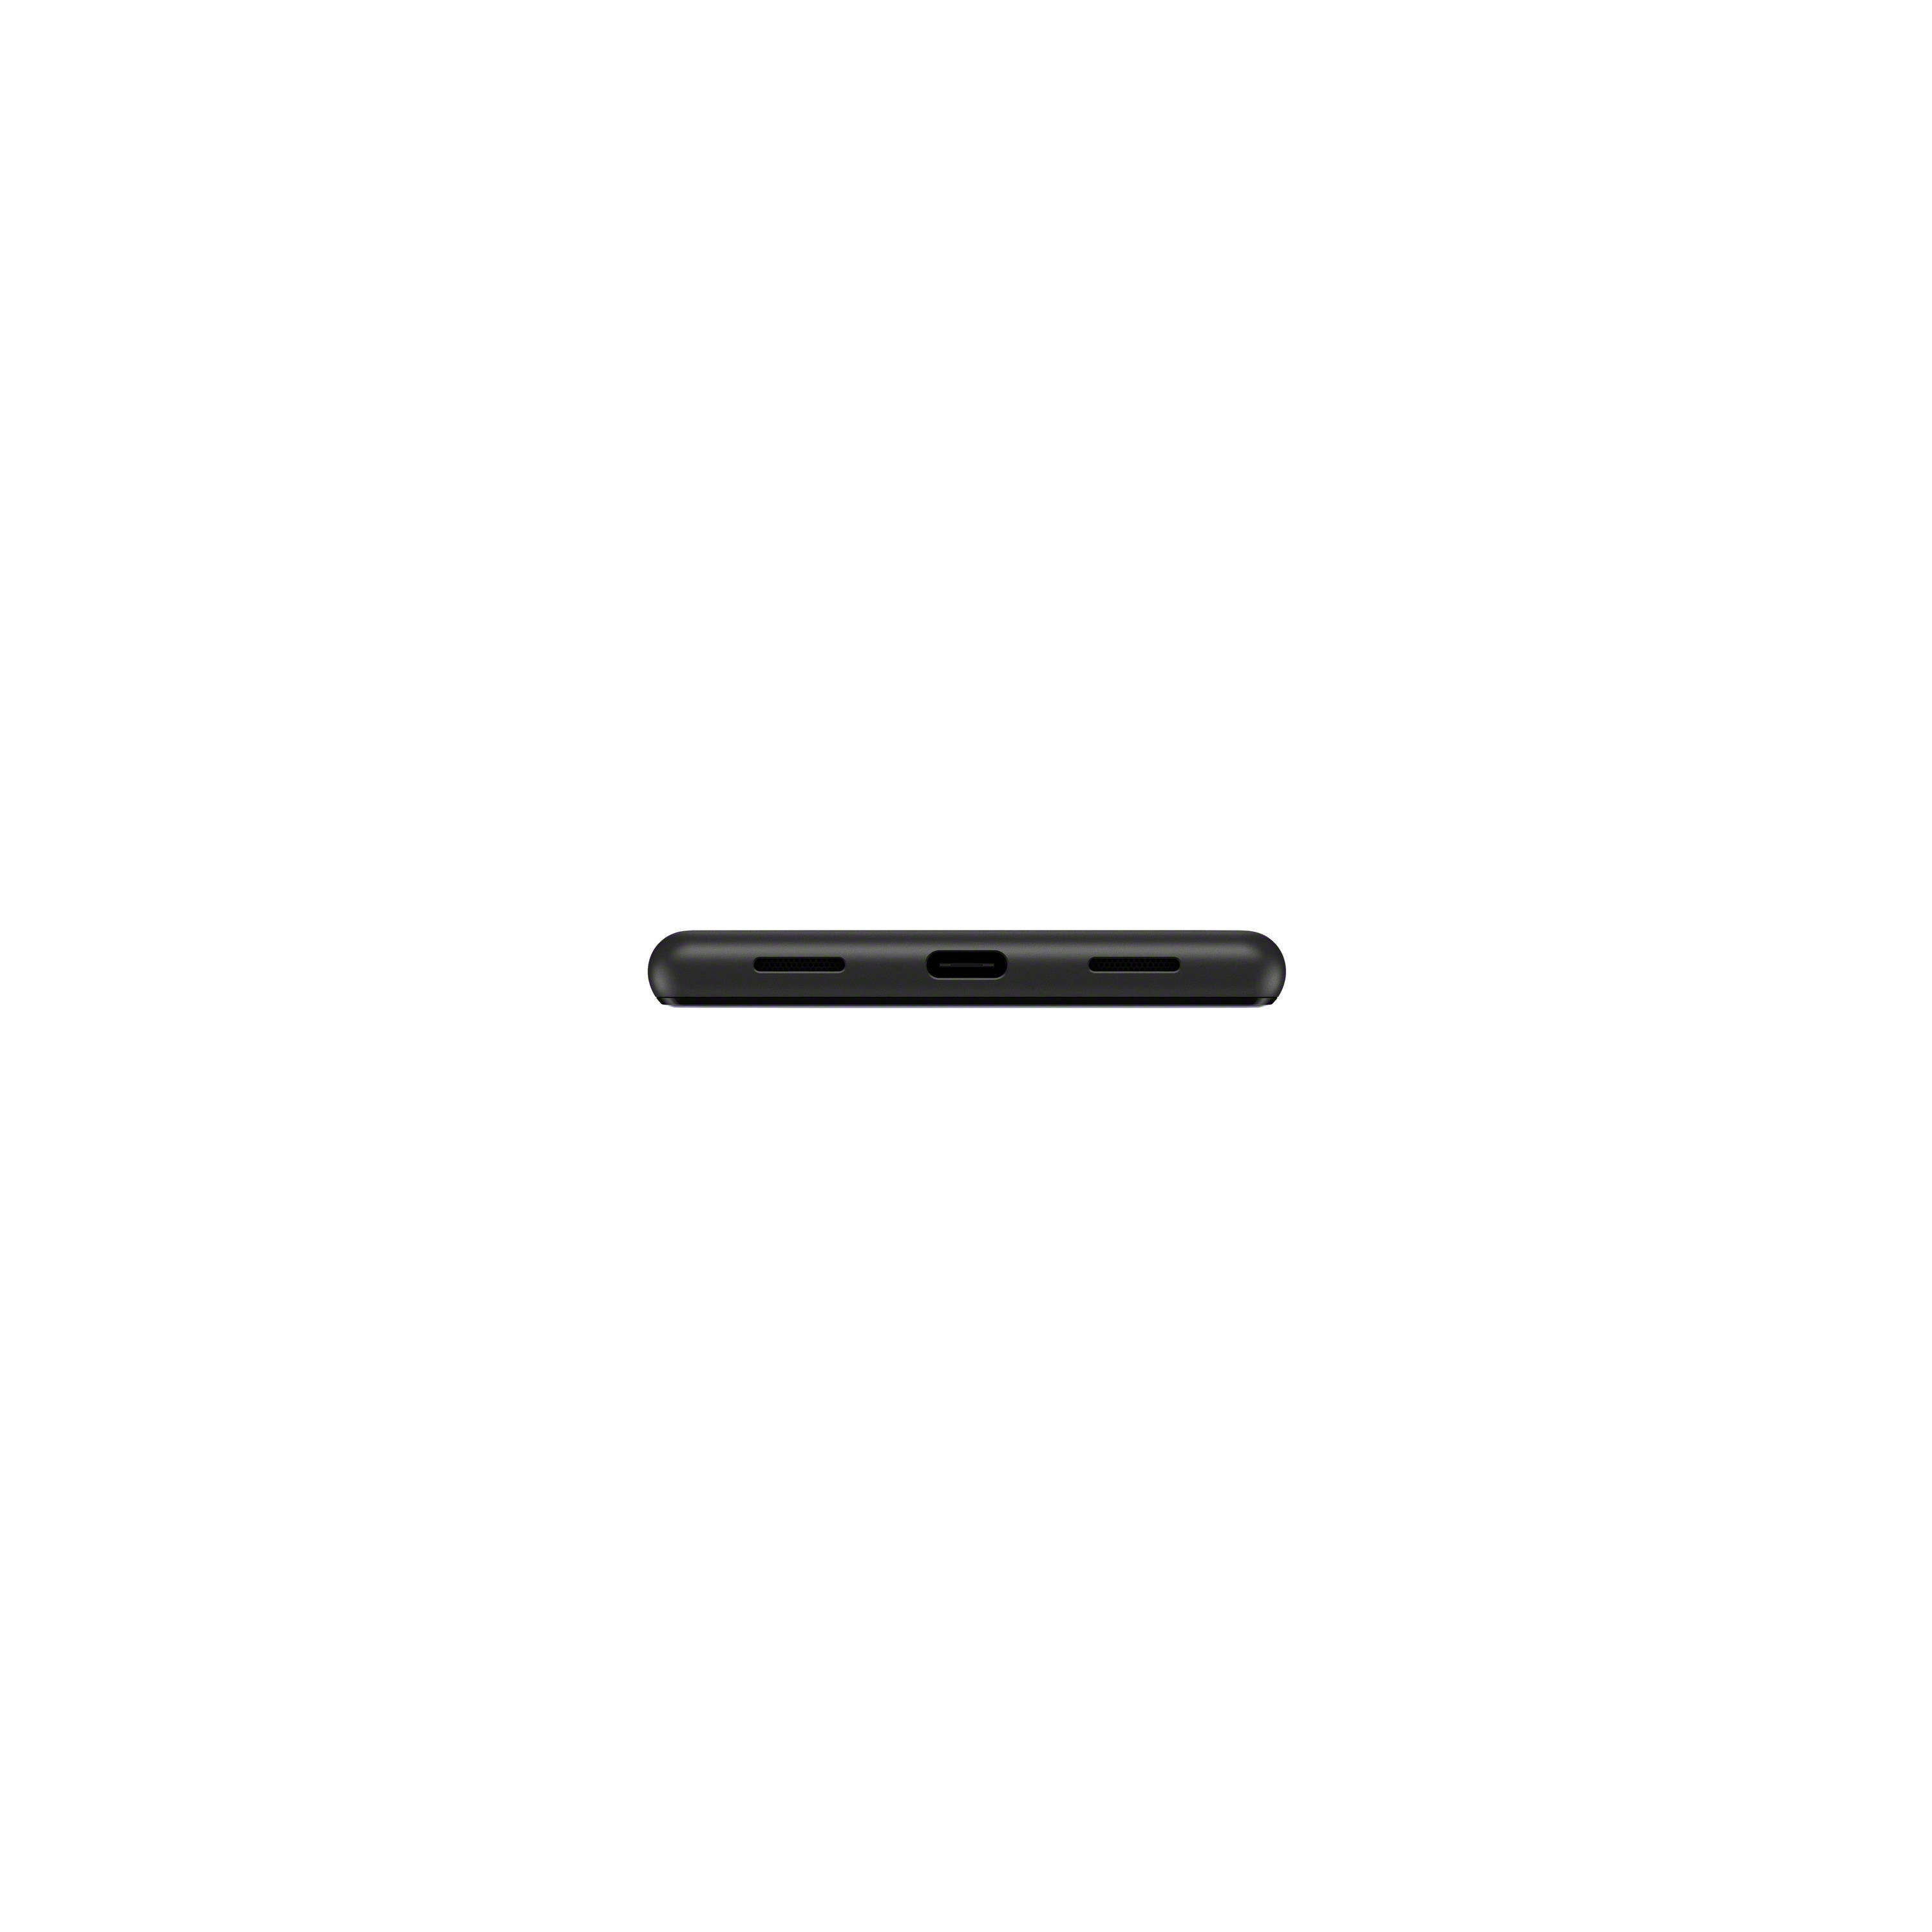 SONY Xperia L4 64 GB SIM 21:9 Dual Display Schwarz